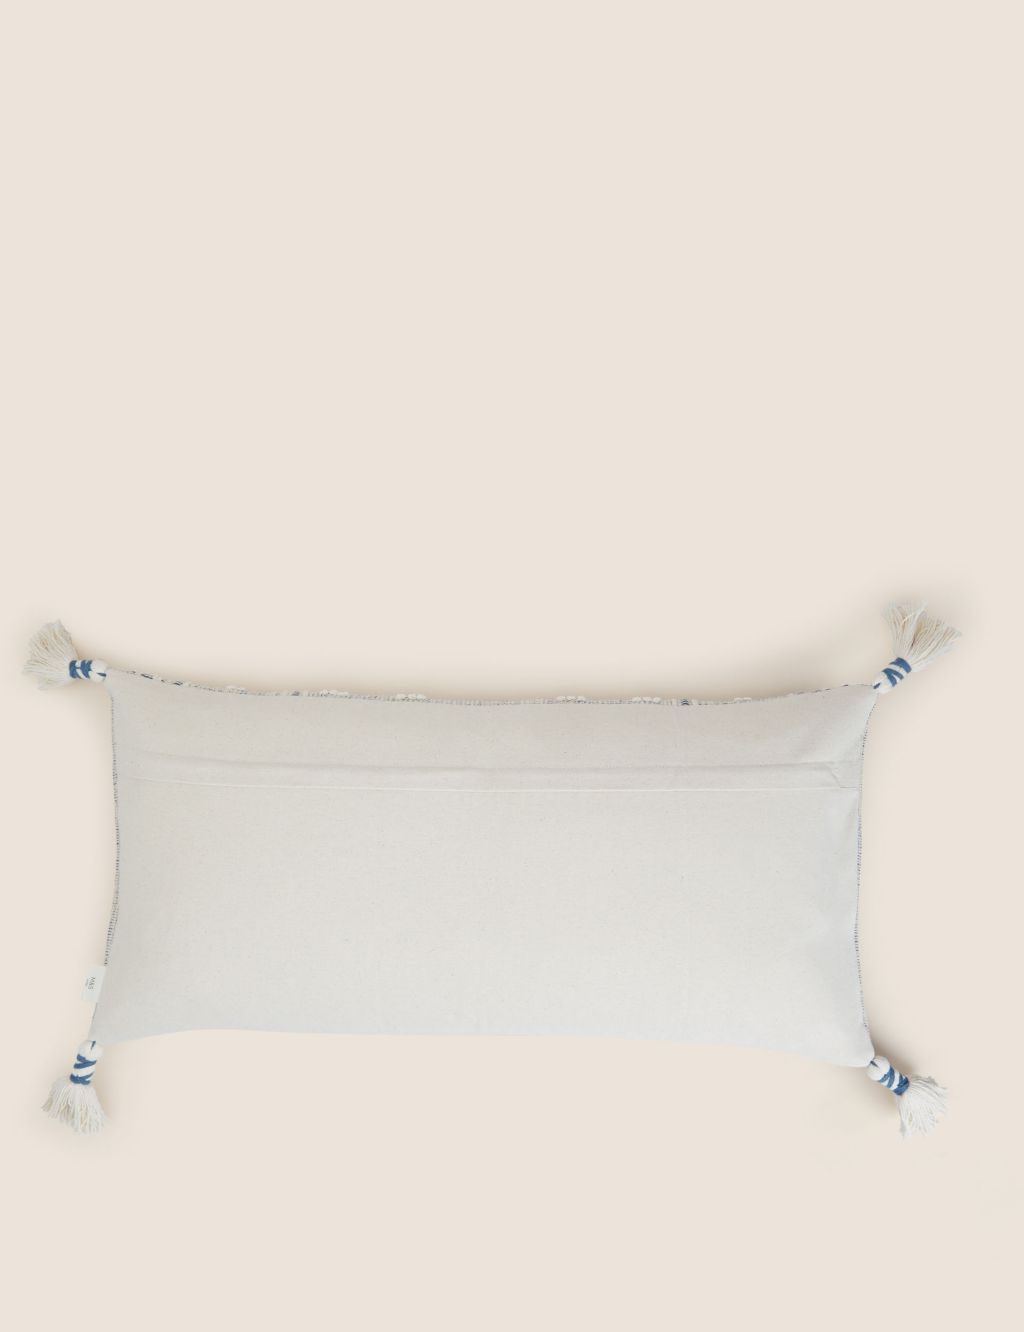 Seville Amar Large Textured Bolster Cushion image 4